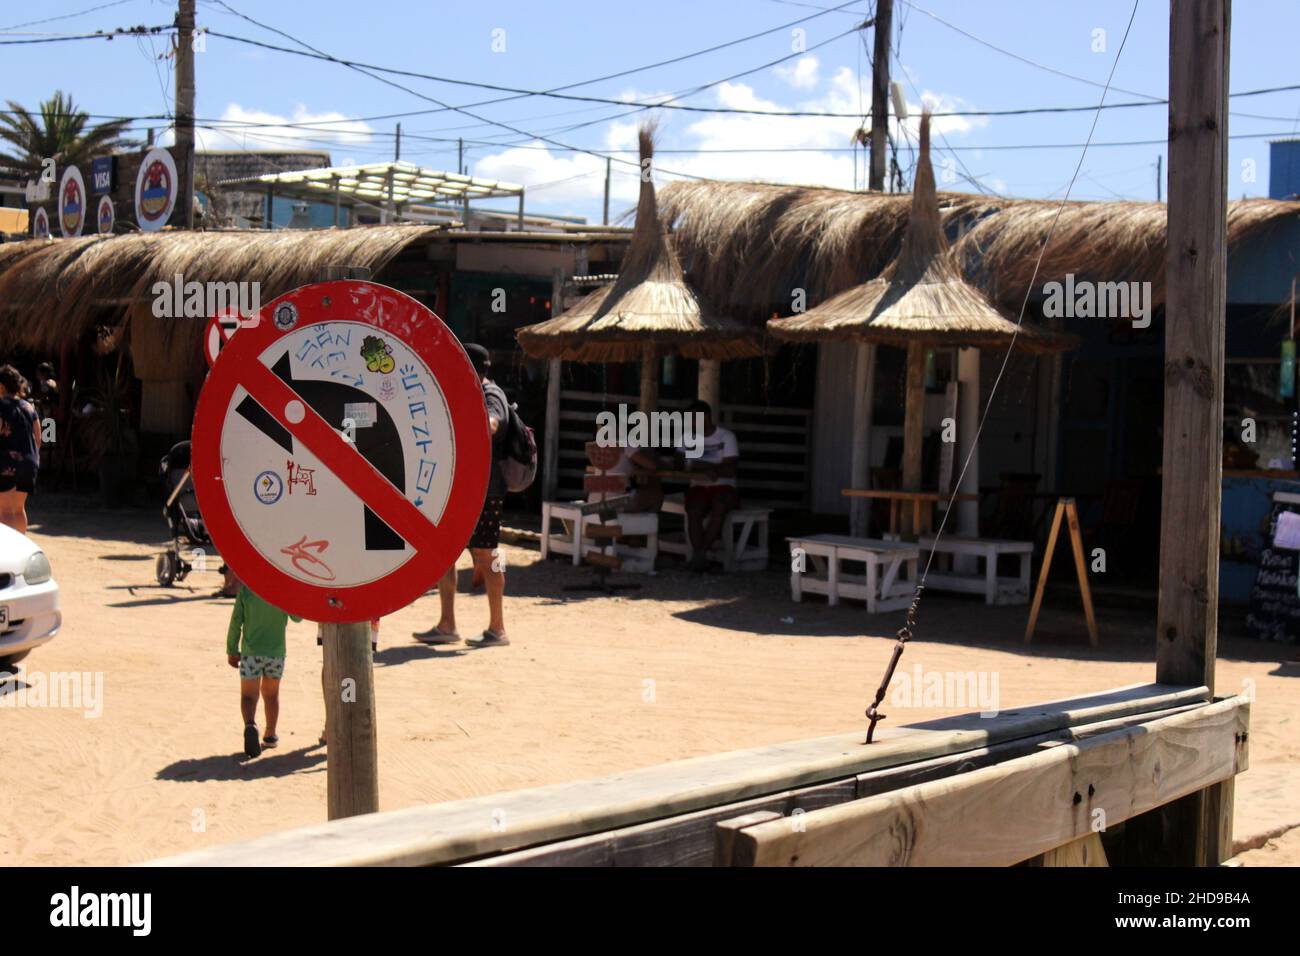 A street sign indicating not to turn left in Punta del Diablo, Rocha, Uruguay. Stock Photo